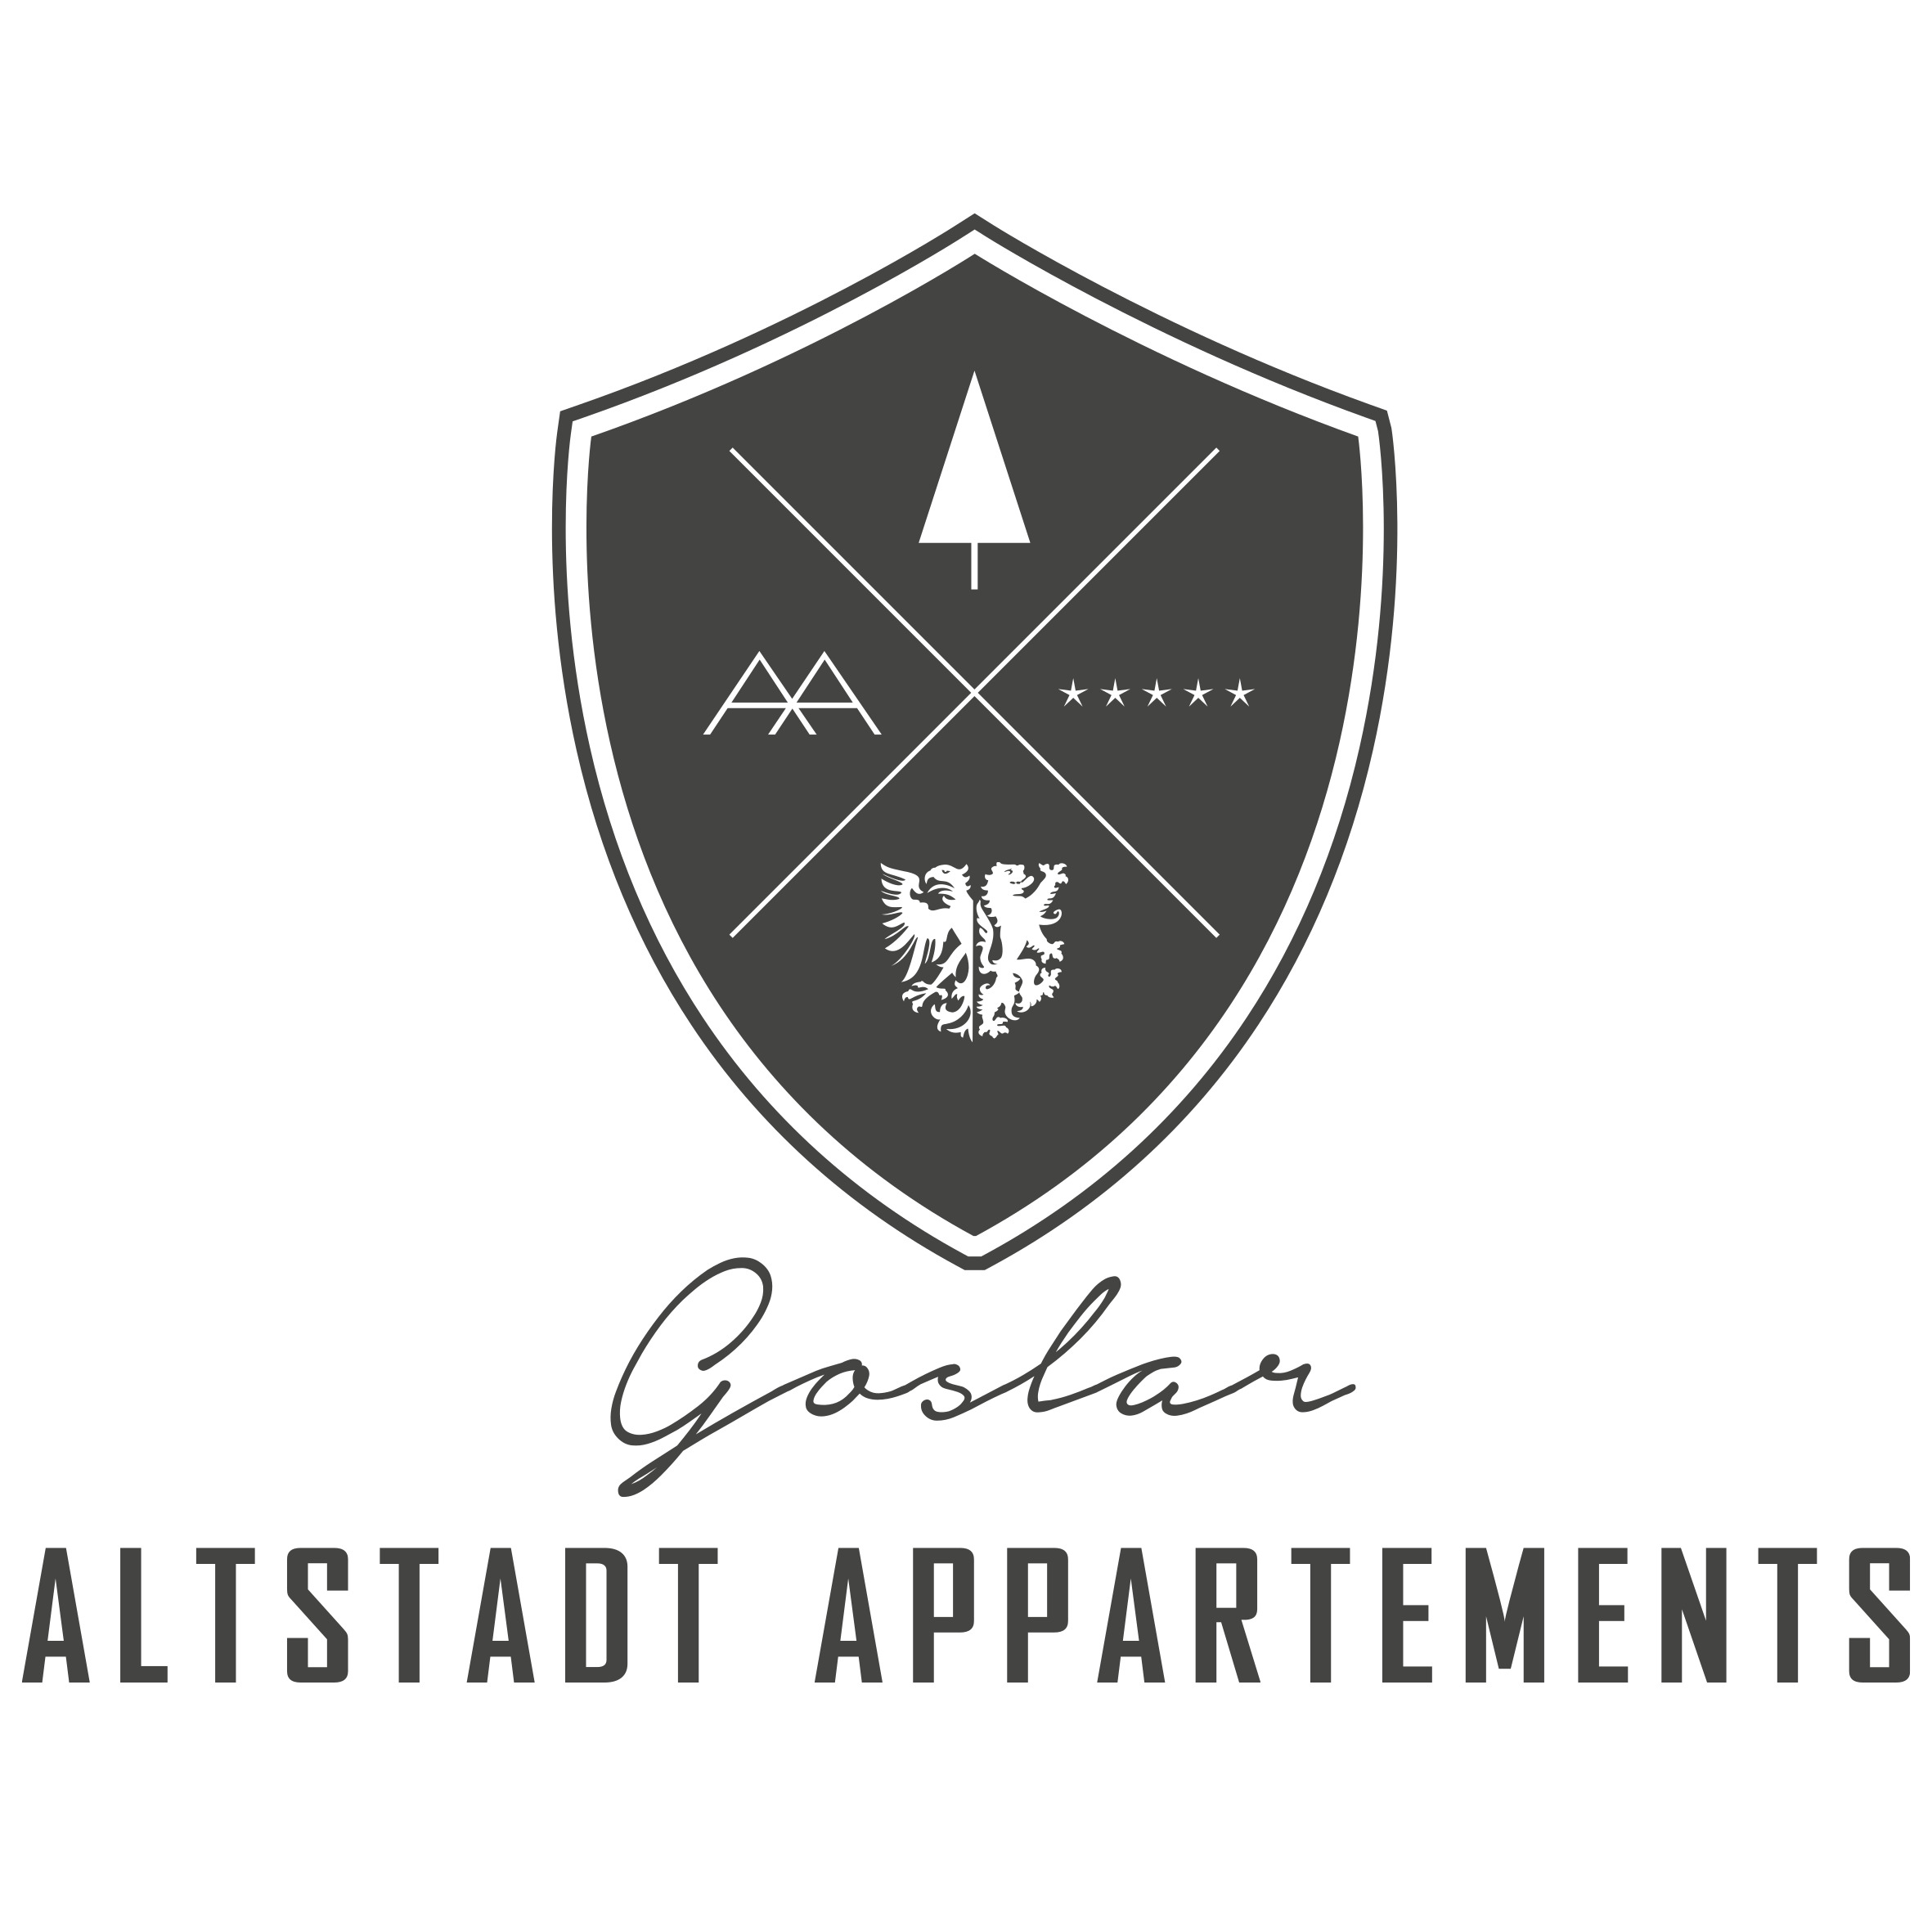 You are currently viewing Neuer Premiumförderer – Altstadt Appartements Goslar GmbH